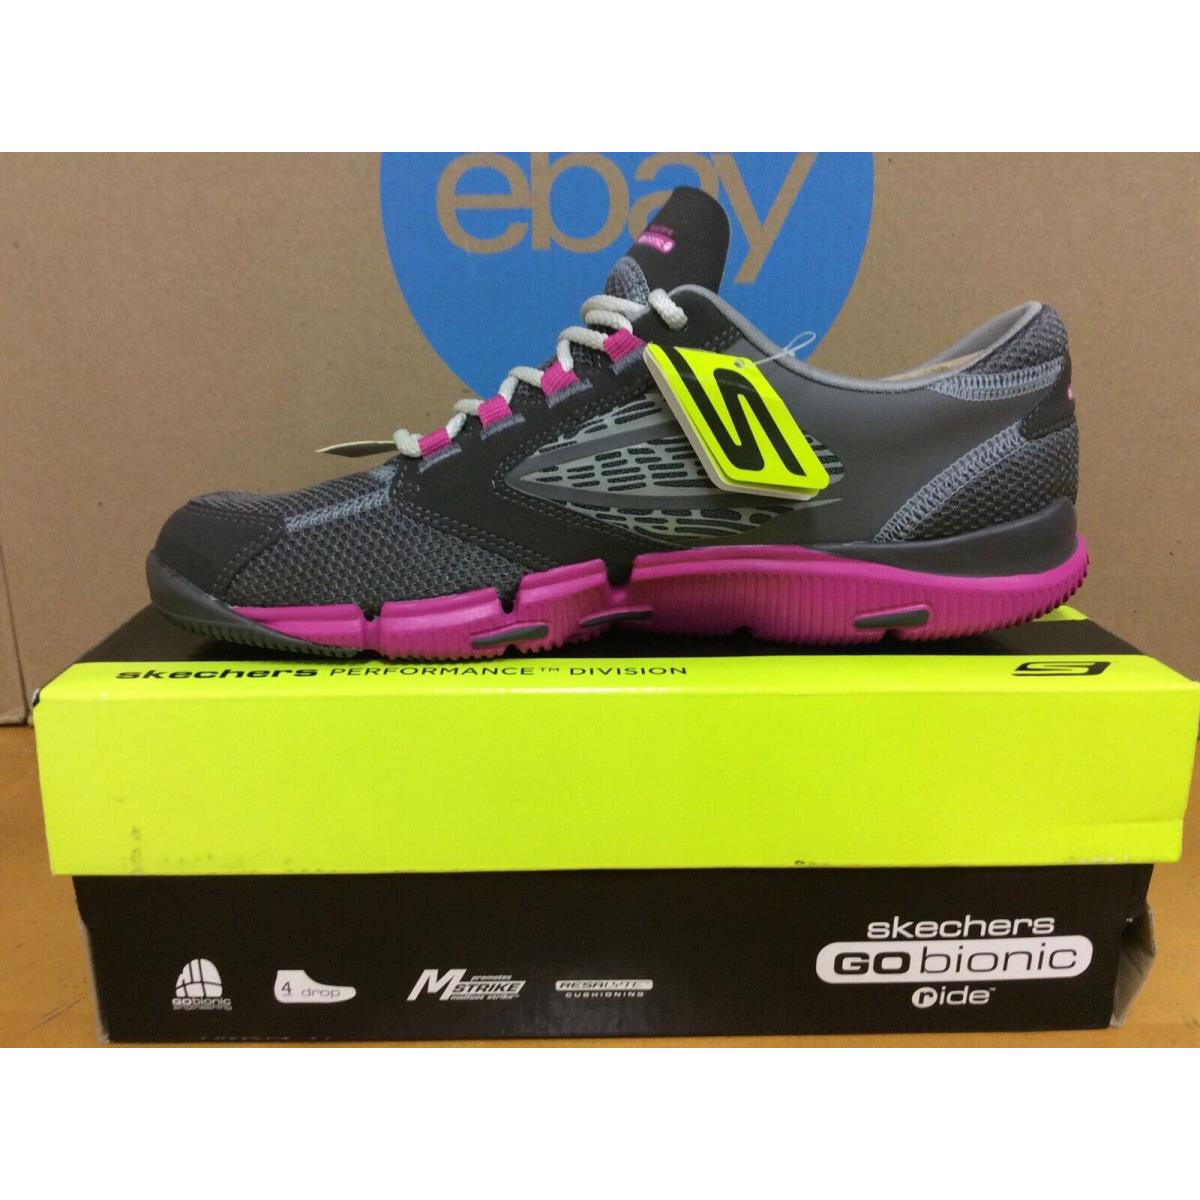 Skechers shoes Bionic Ride - Charcoal Hot Pink 5